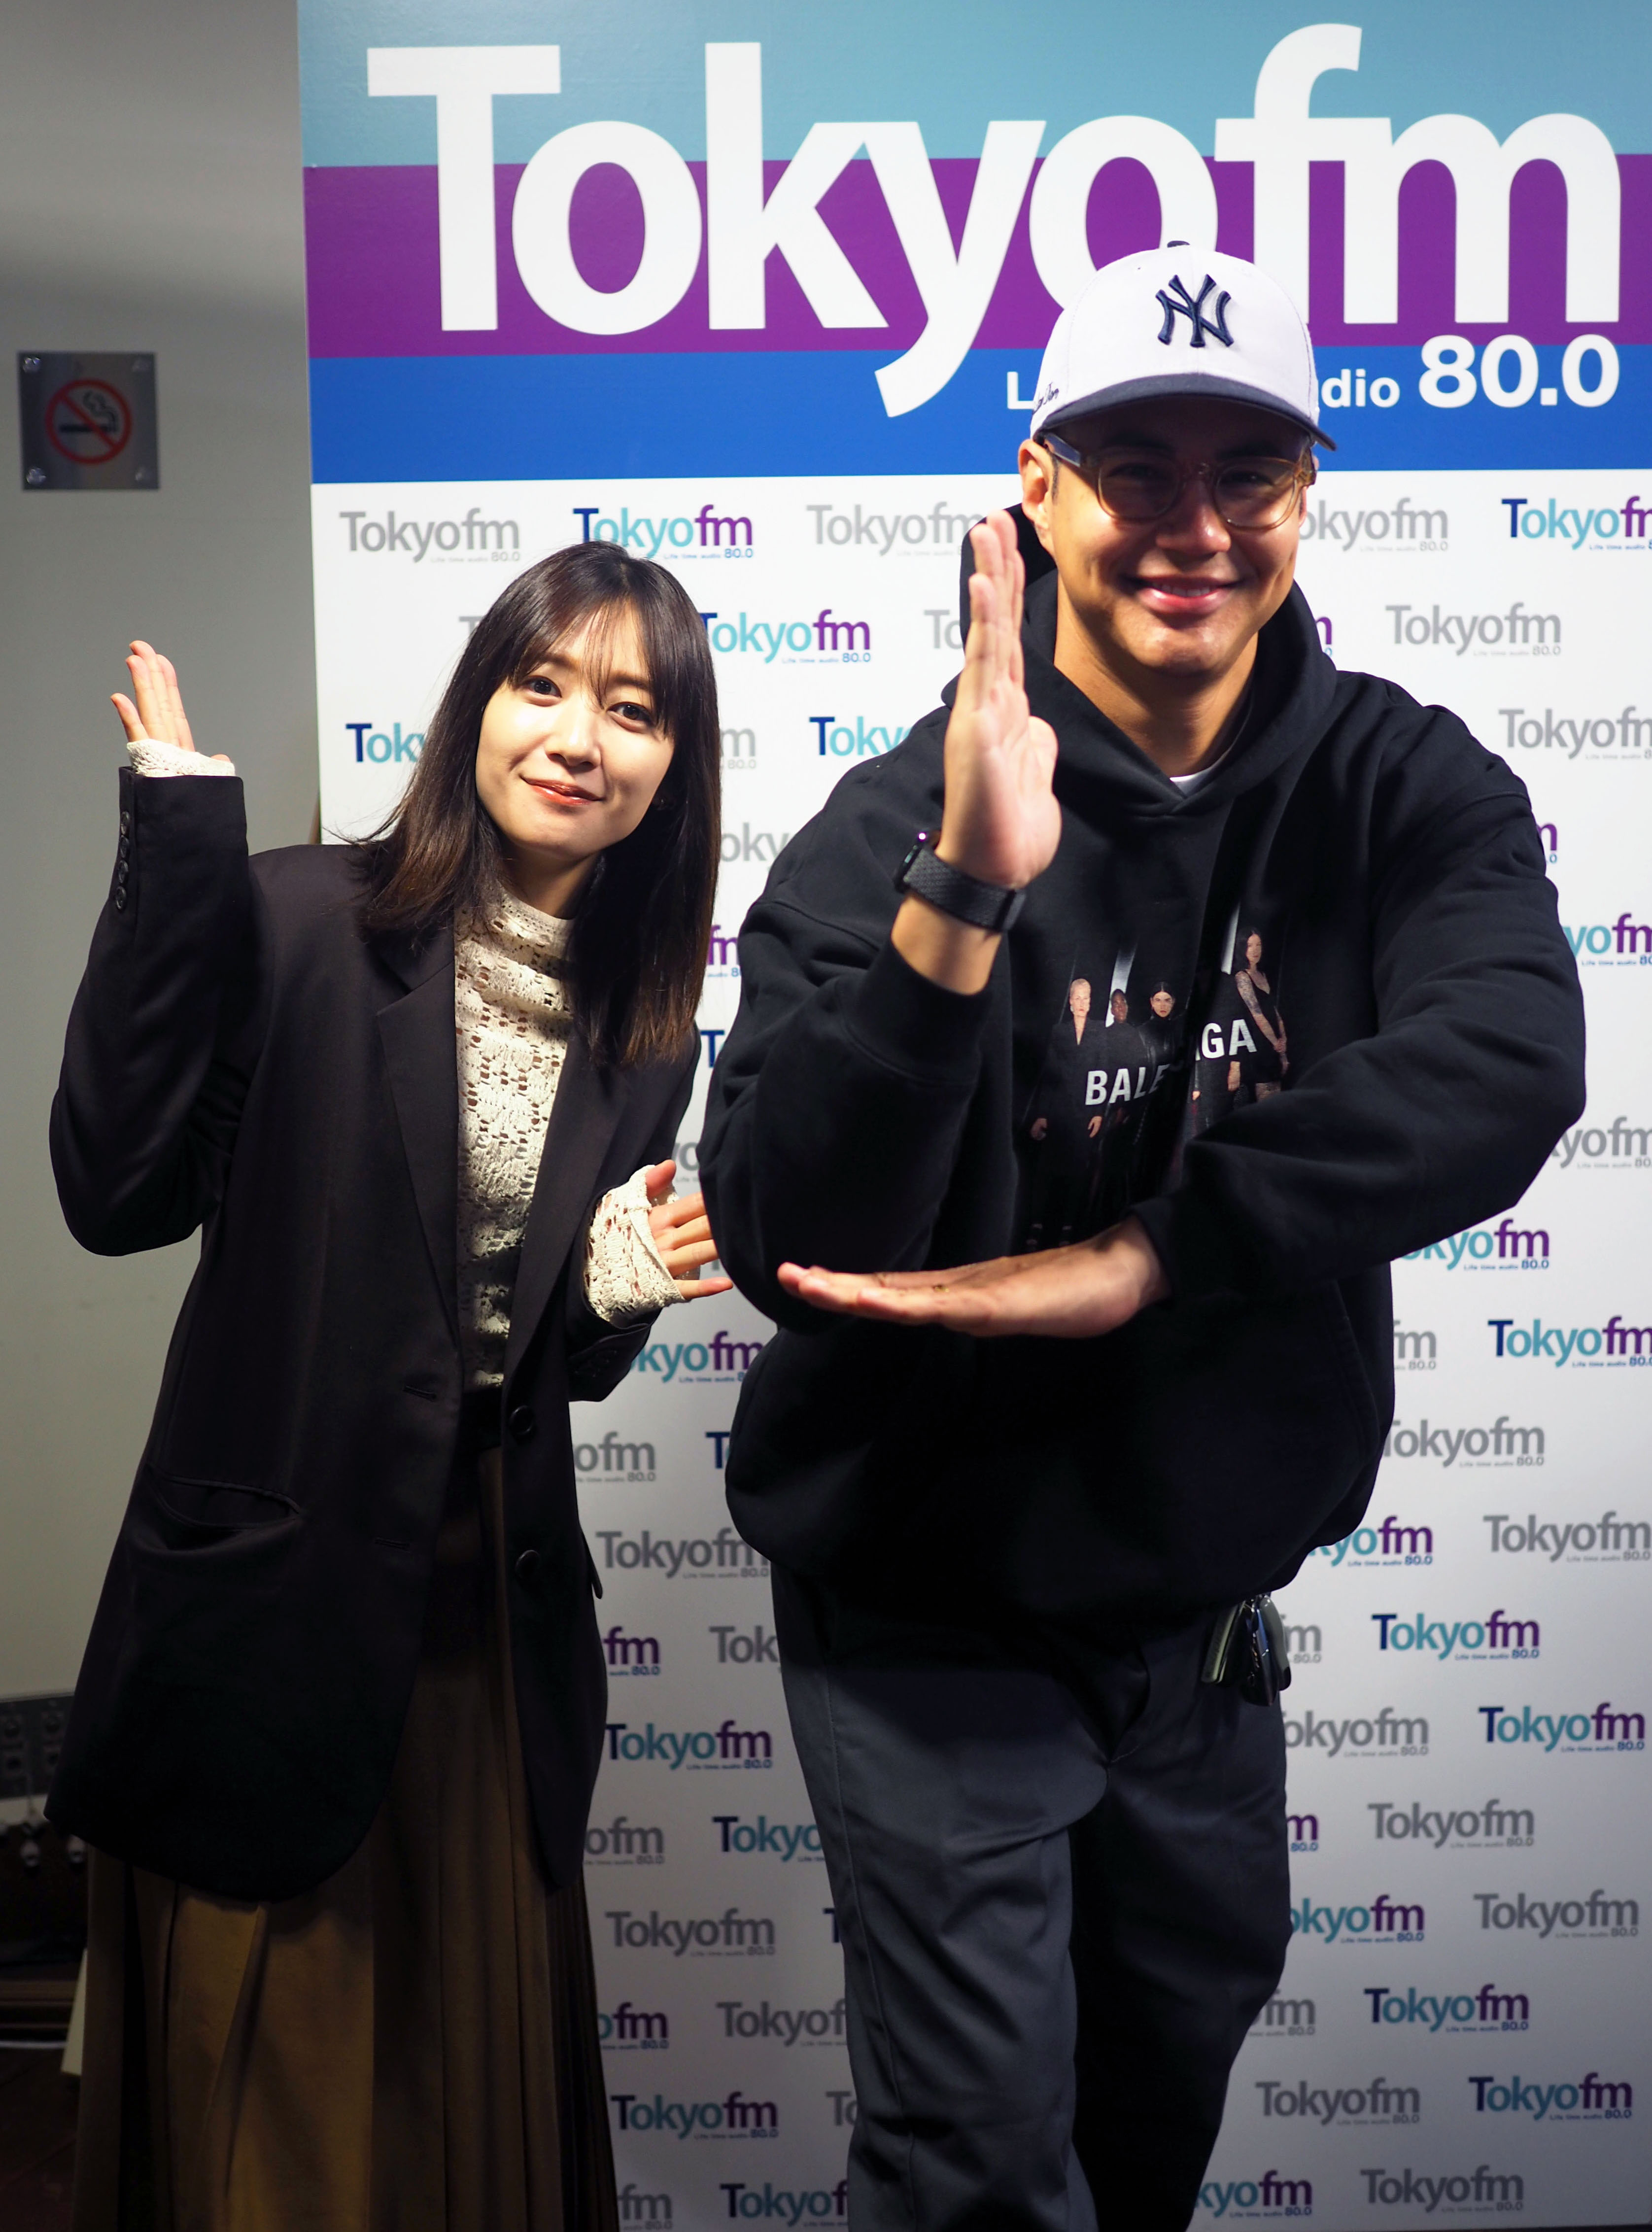 【TOKYO FM #8】COOL CHOICE LIFEおさらい編